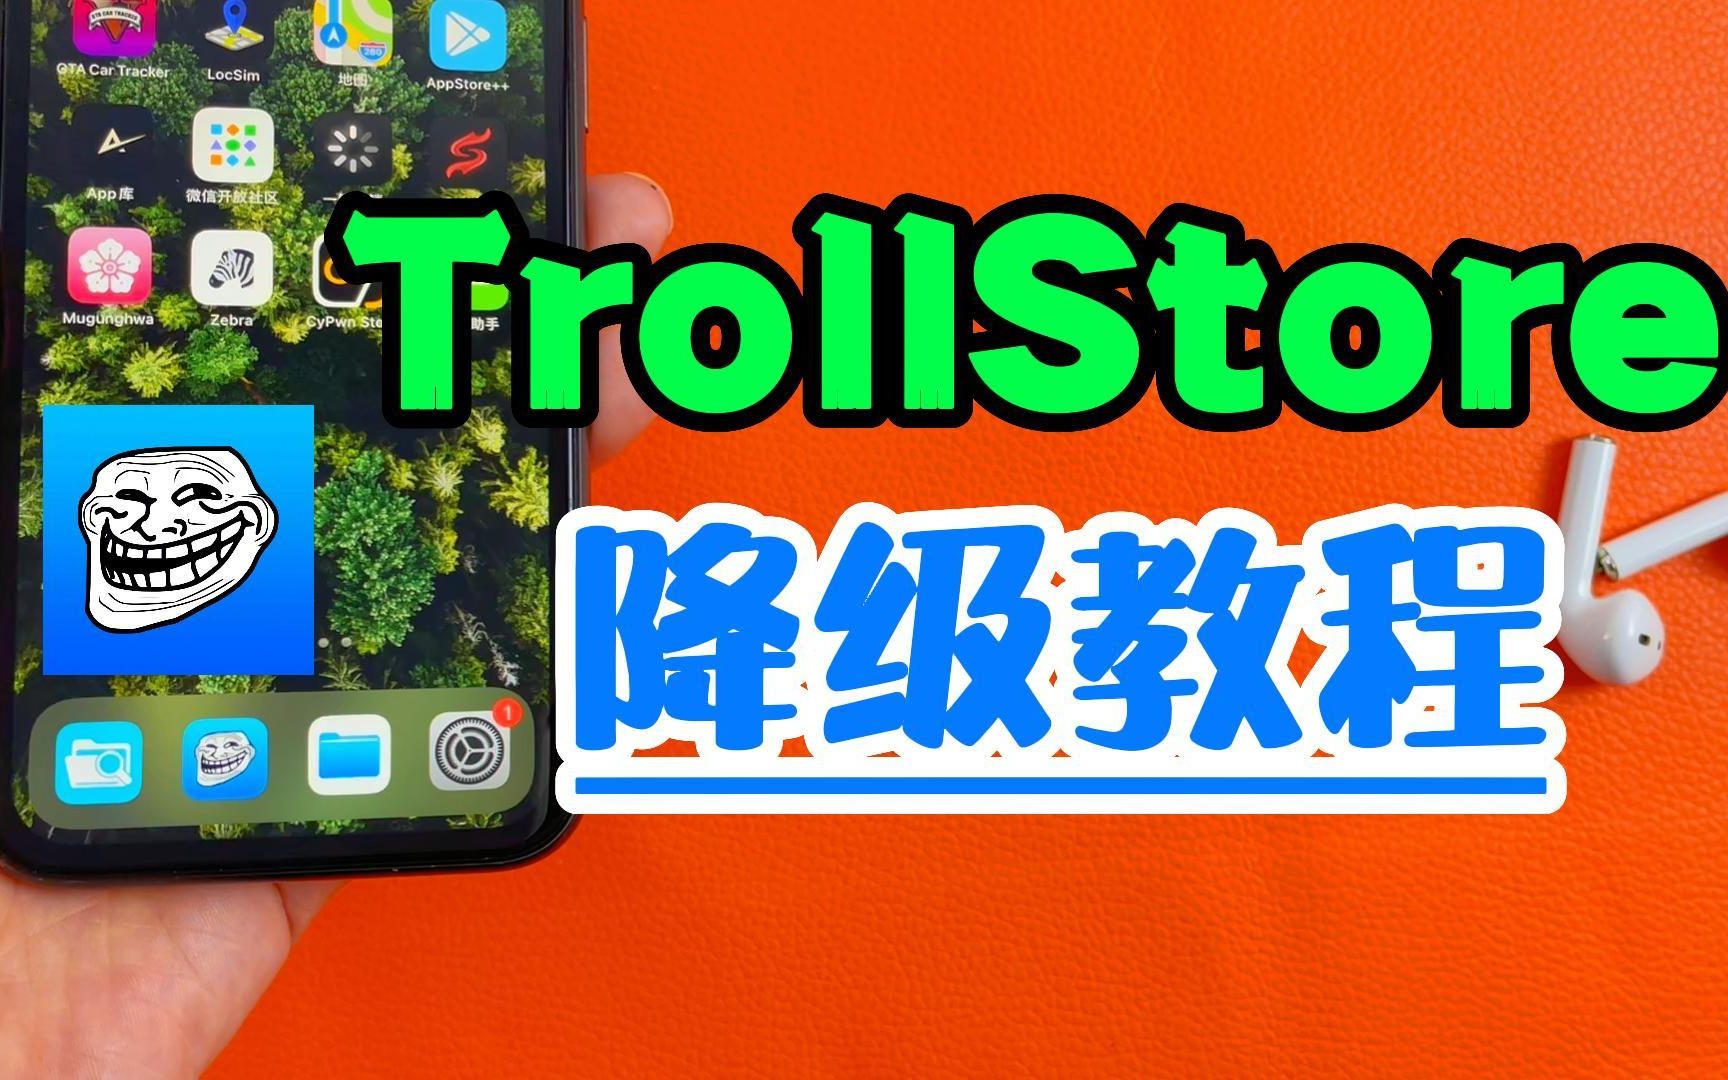 TrollStore巨魔商店详细安装教程以及安装报错解决方法 - 哔哩哔哩